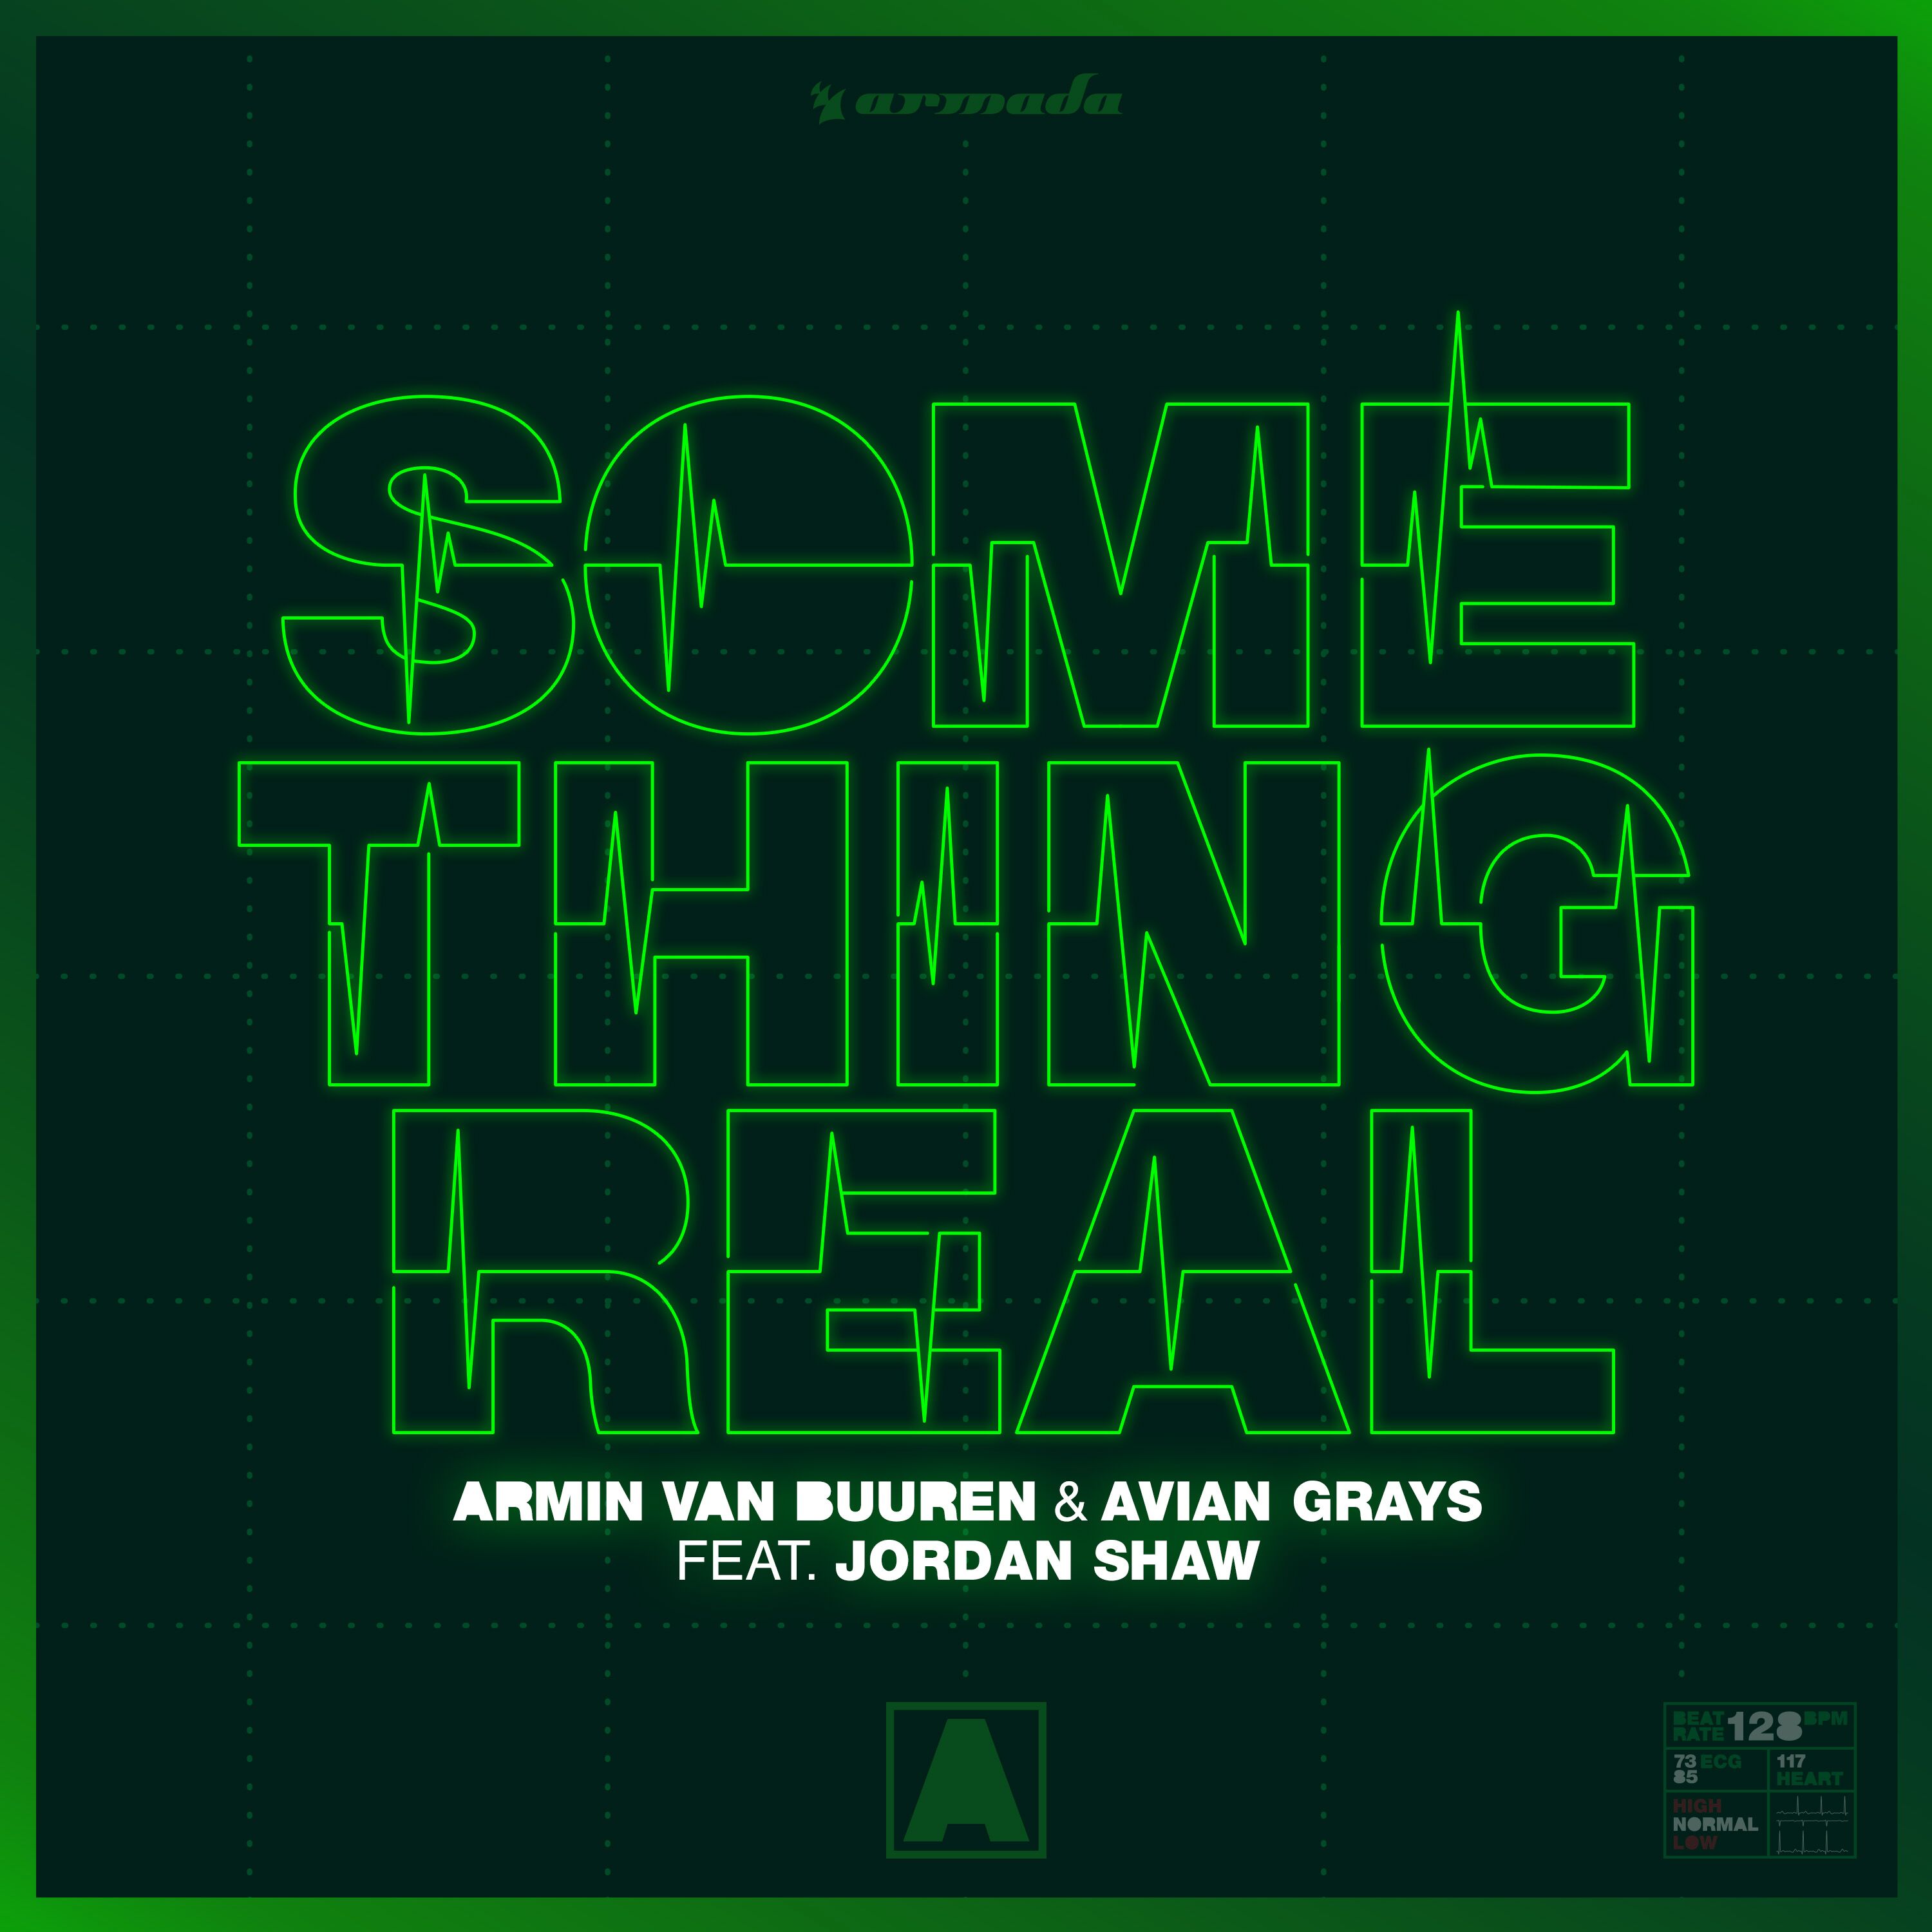 Armin van Buuren and Avian Grays feat. Jordan Shaw presents Something Real on Armada Music